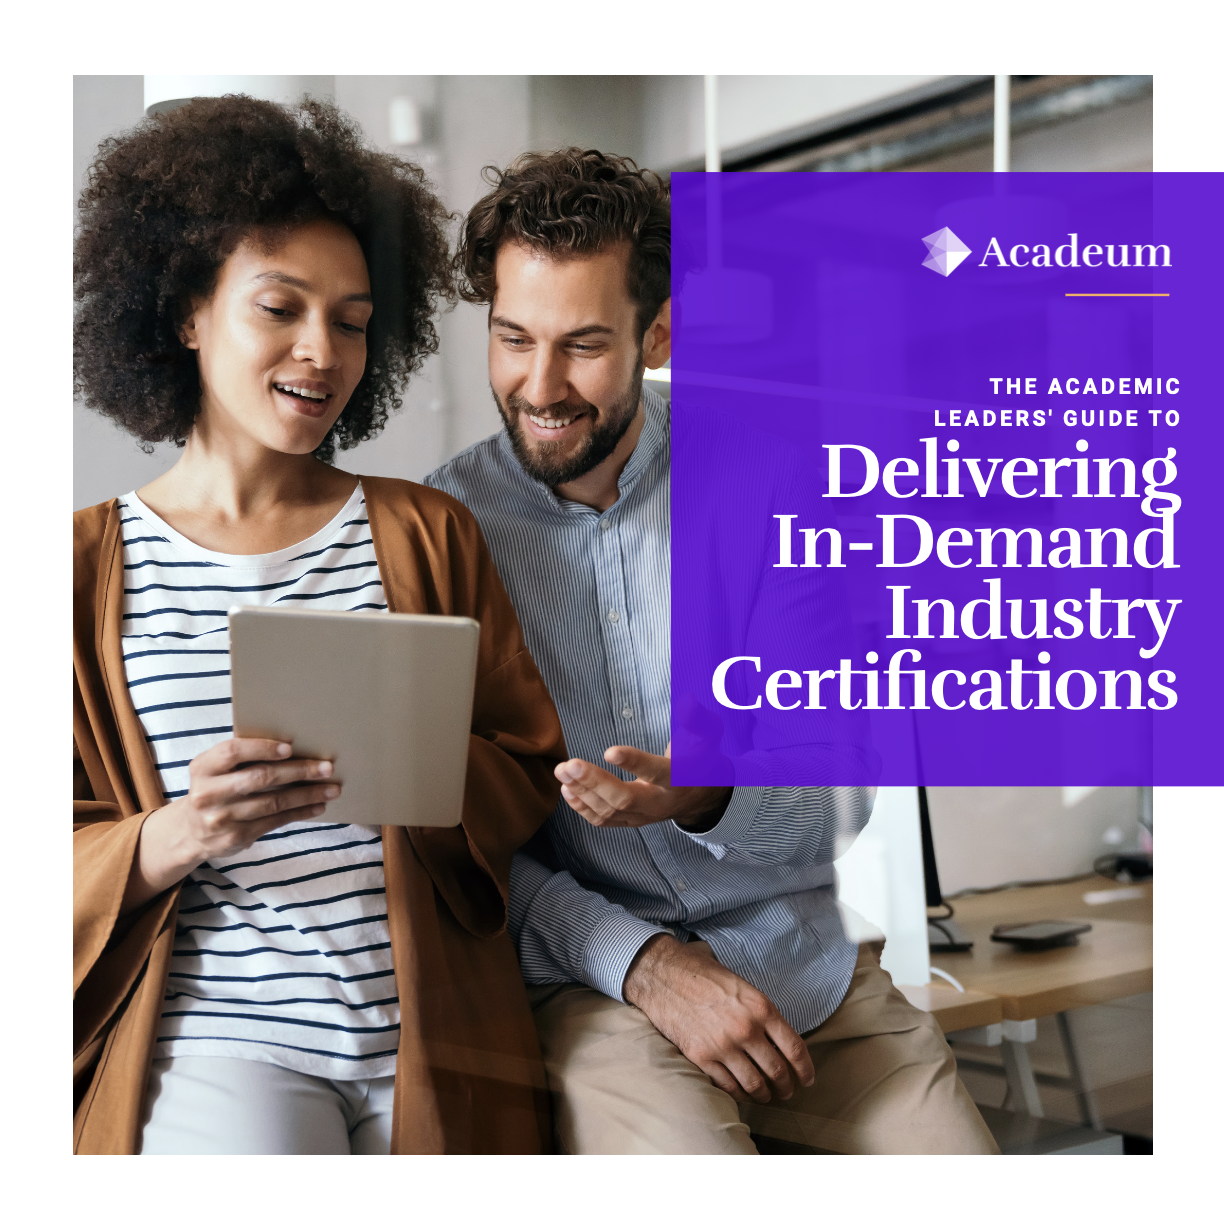 Deliversing In-Demand Industry Certifications